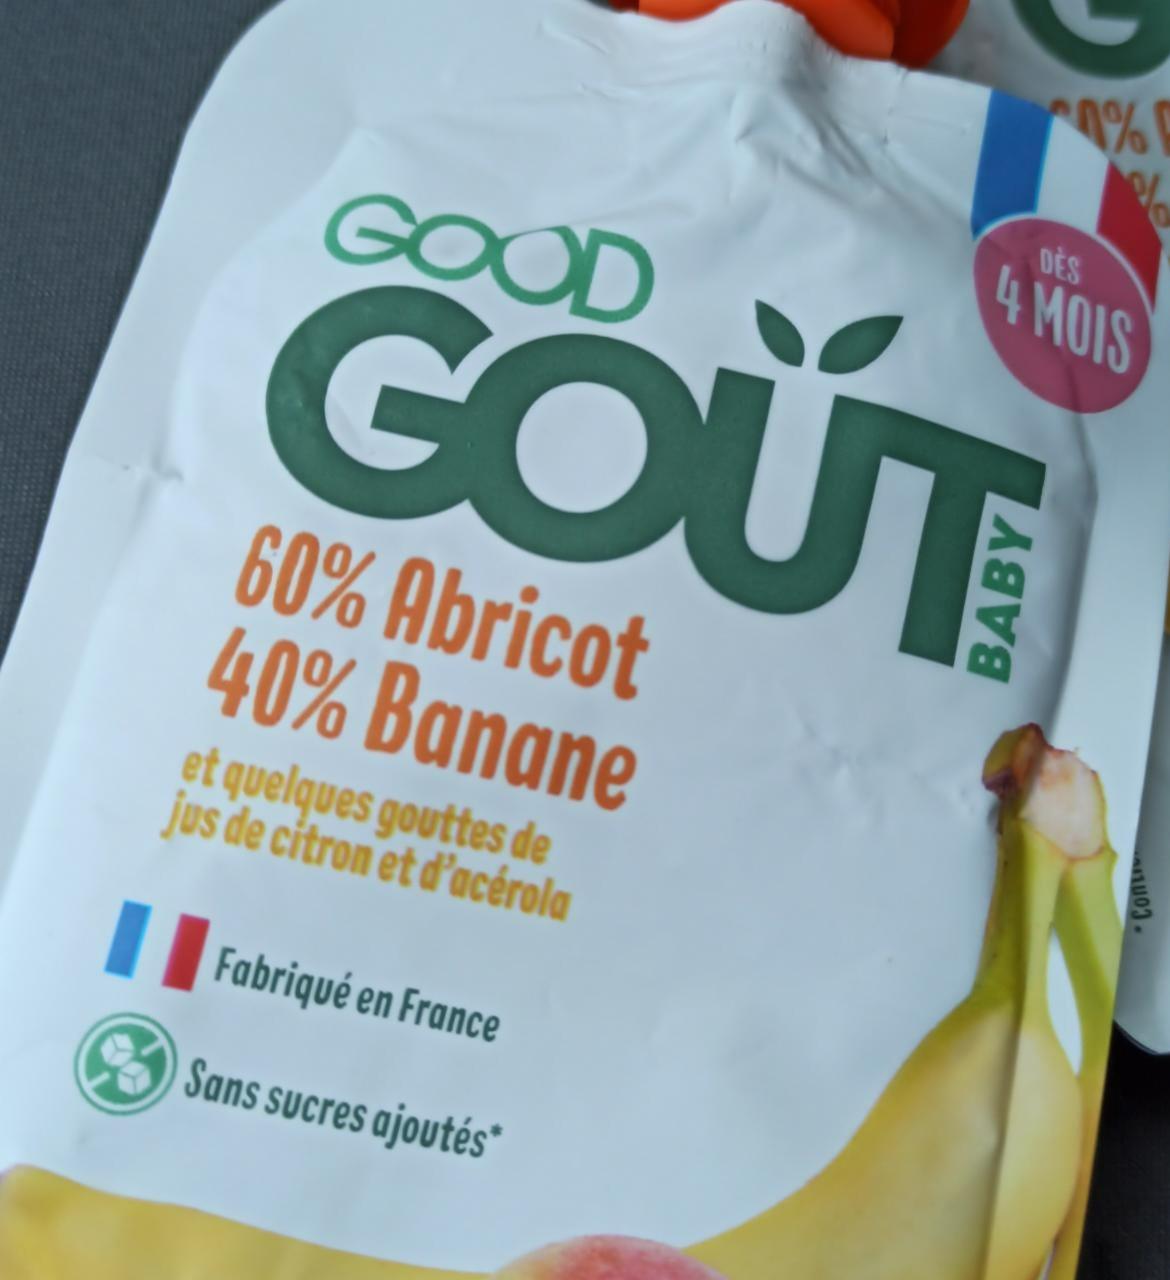 Fotografie - Abricot Banane Good gout